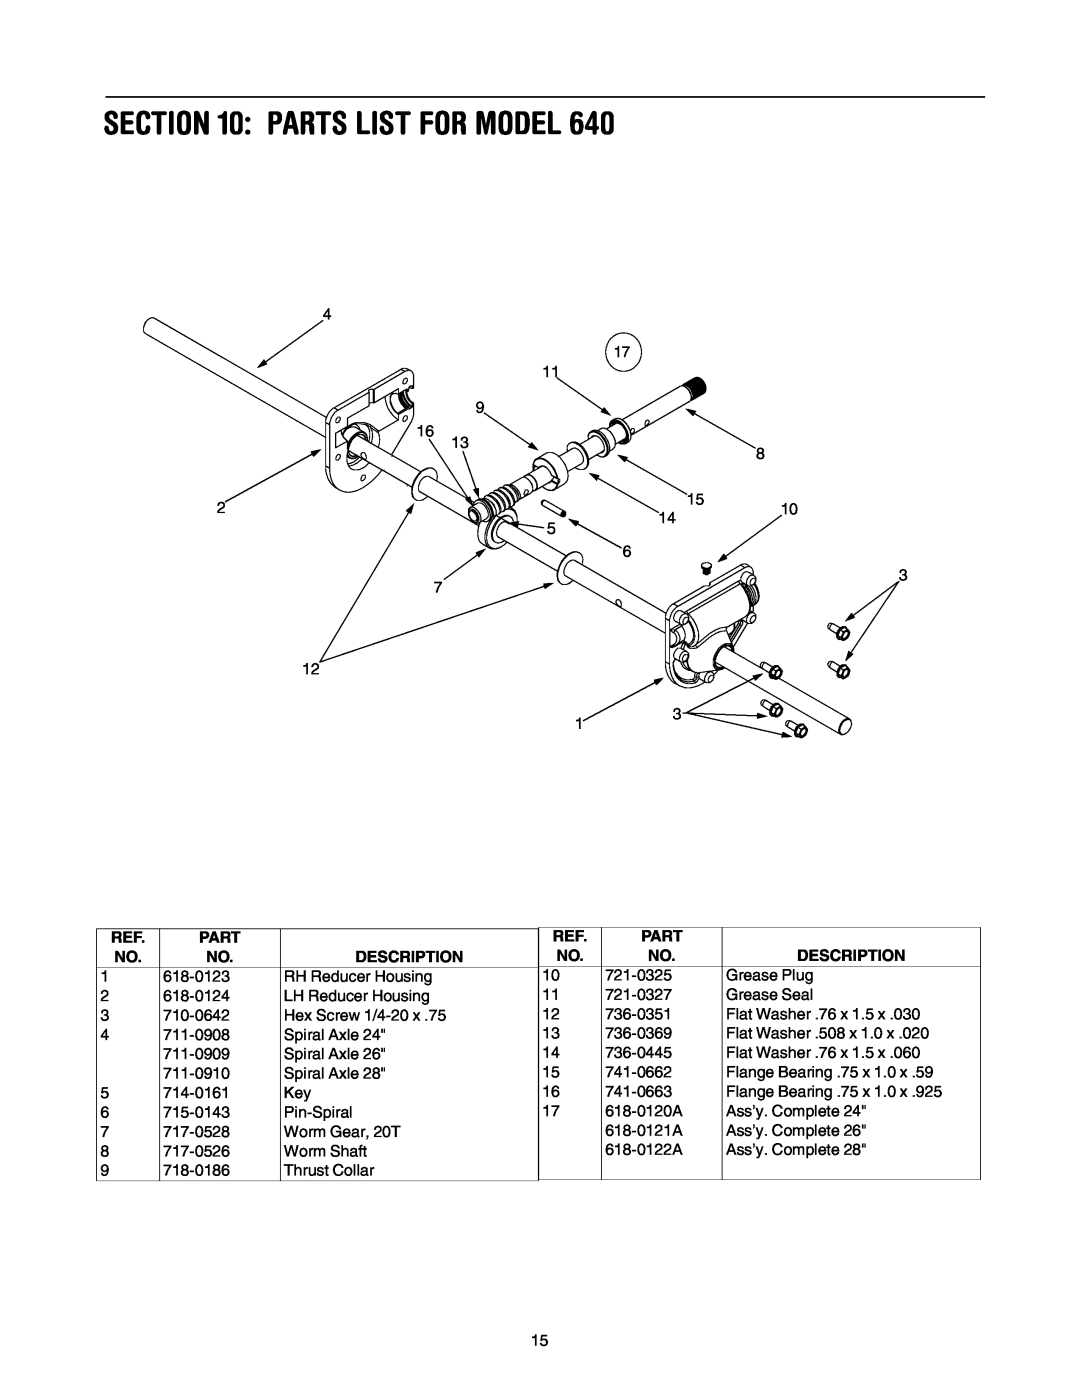 MTD 640 manual Parts List For Model, Description 